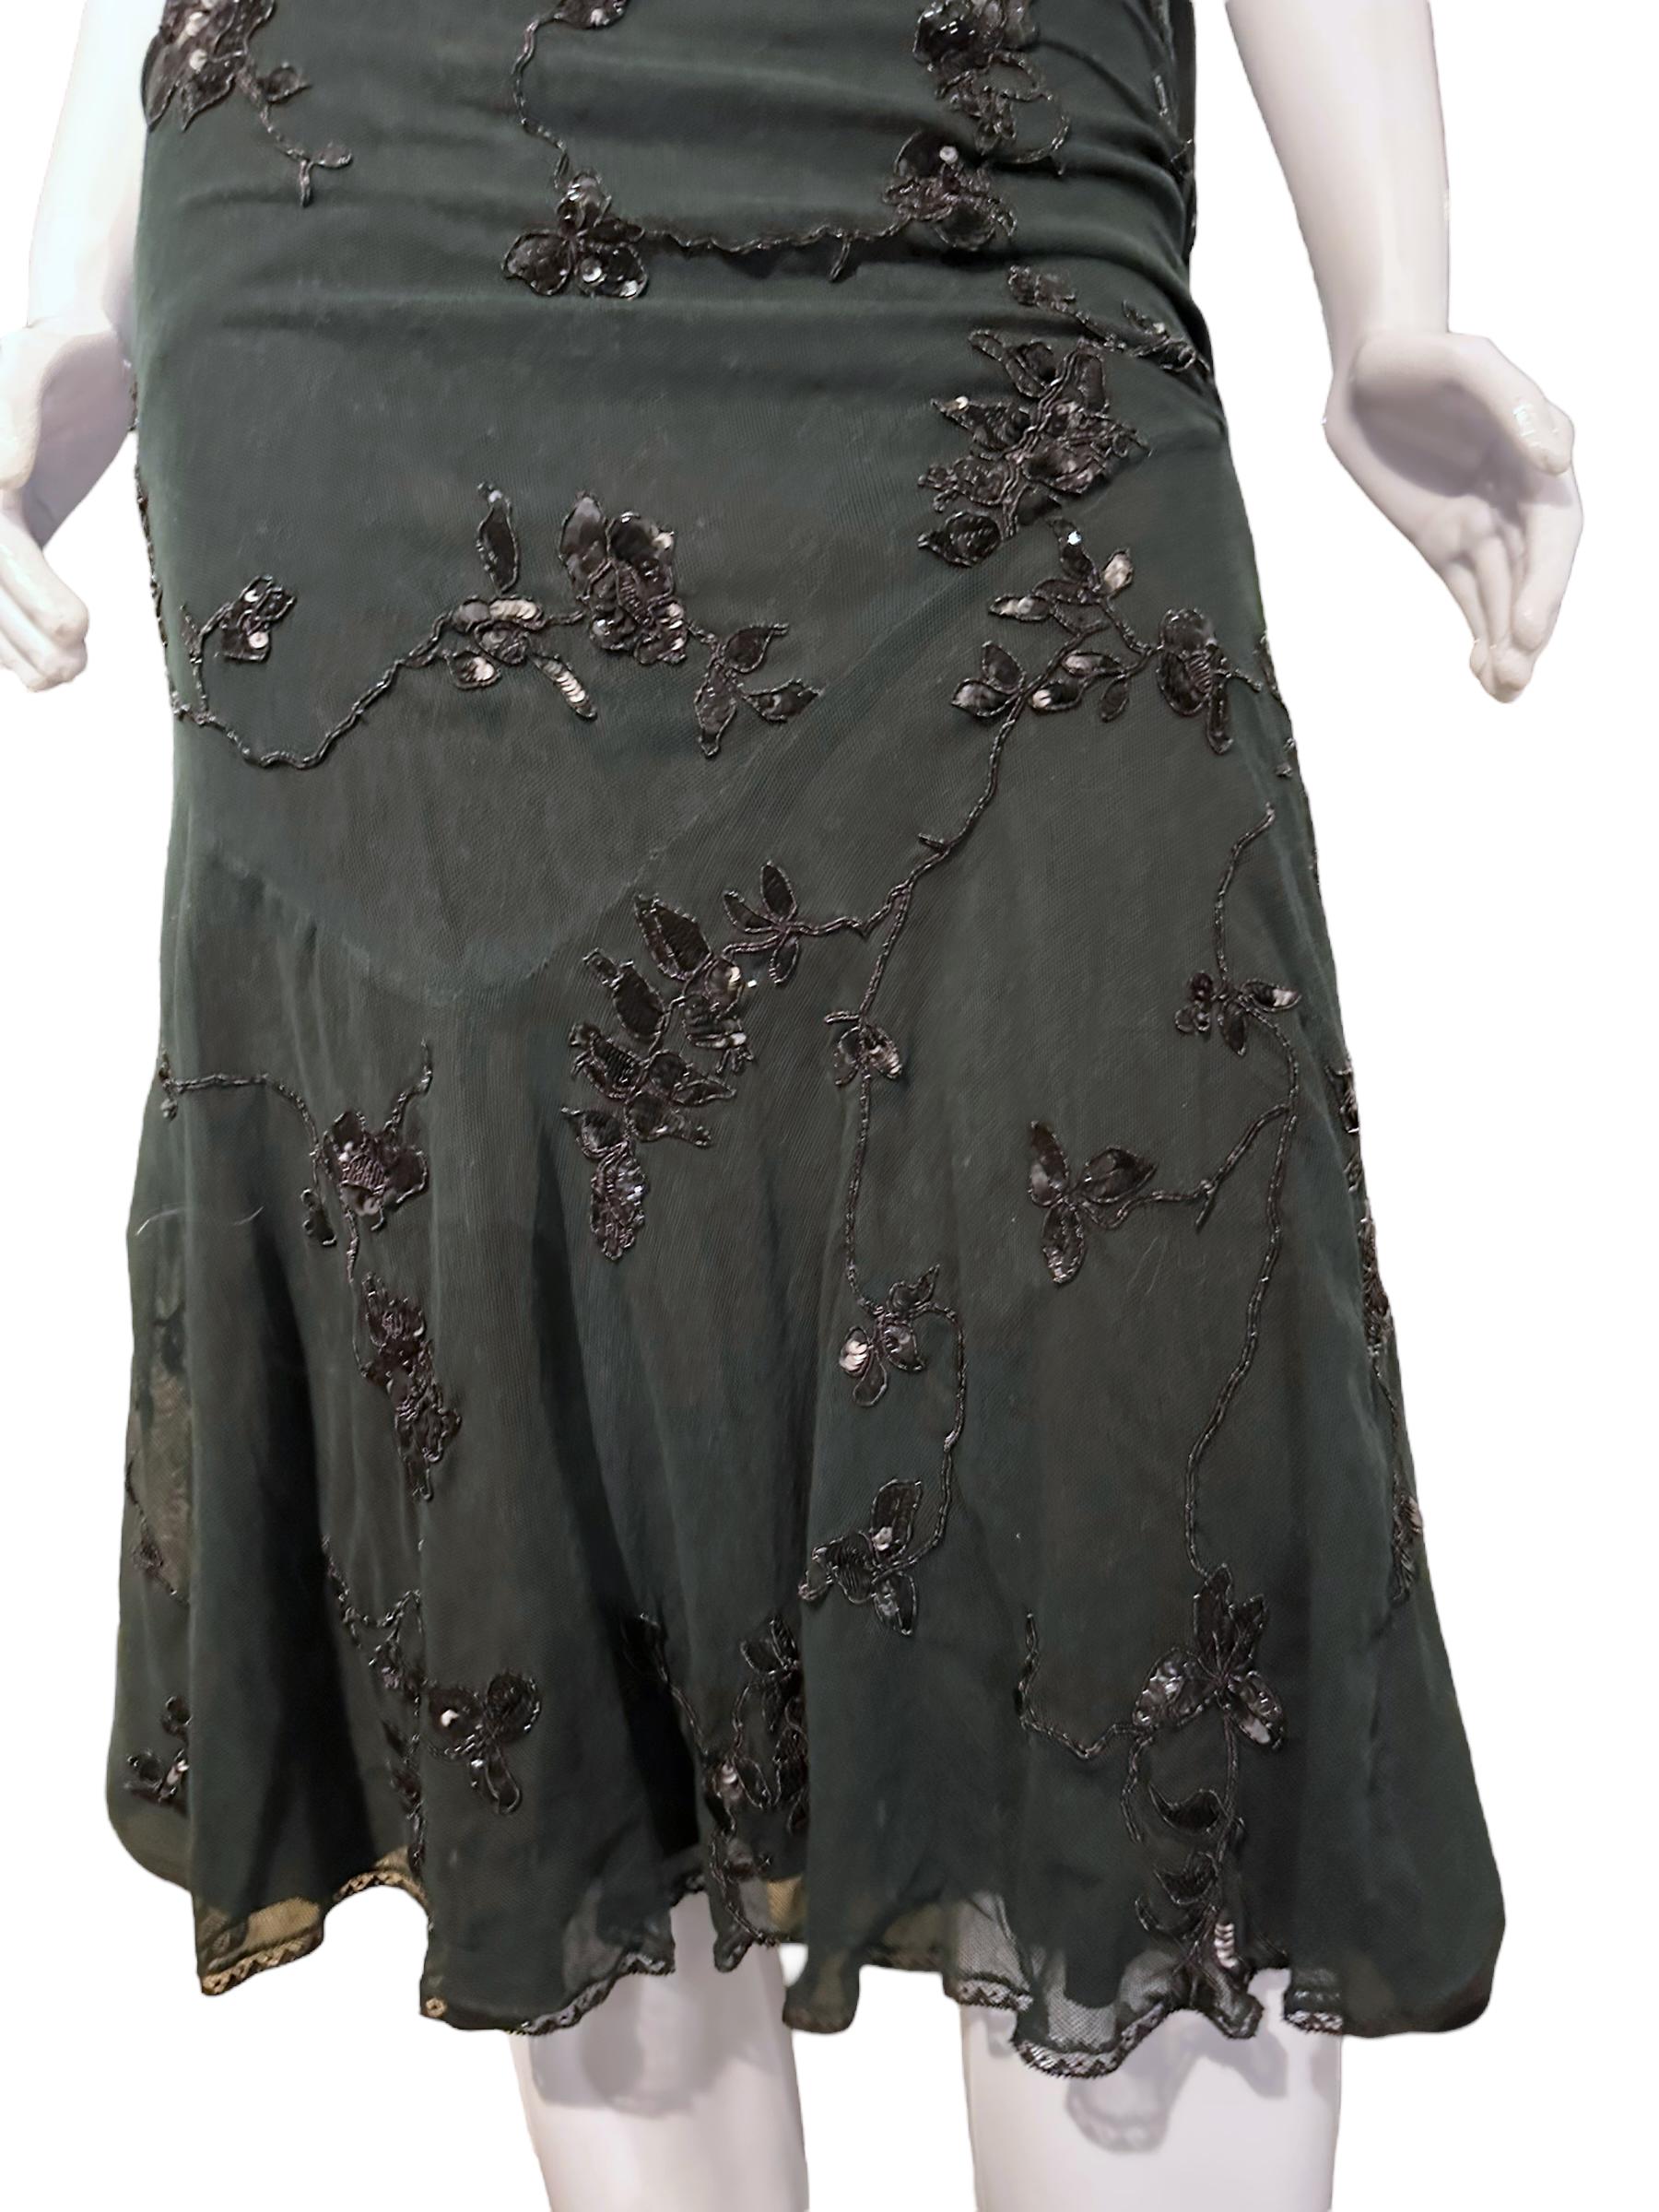 Christian Dior By John Galliano Ss 1998 Beaded Tulle Overlay Slip Dress For Sale 2